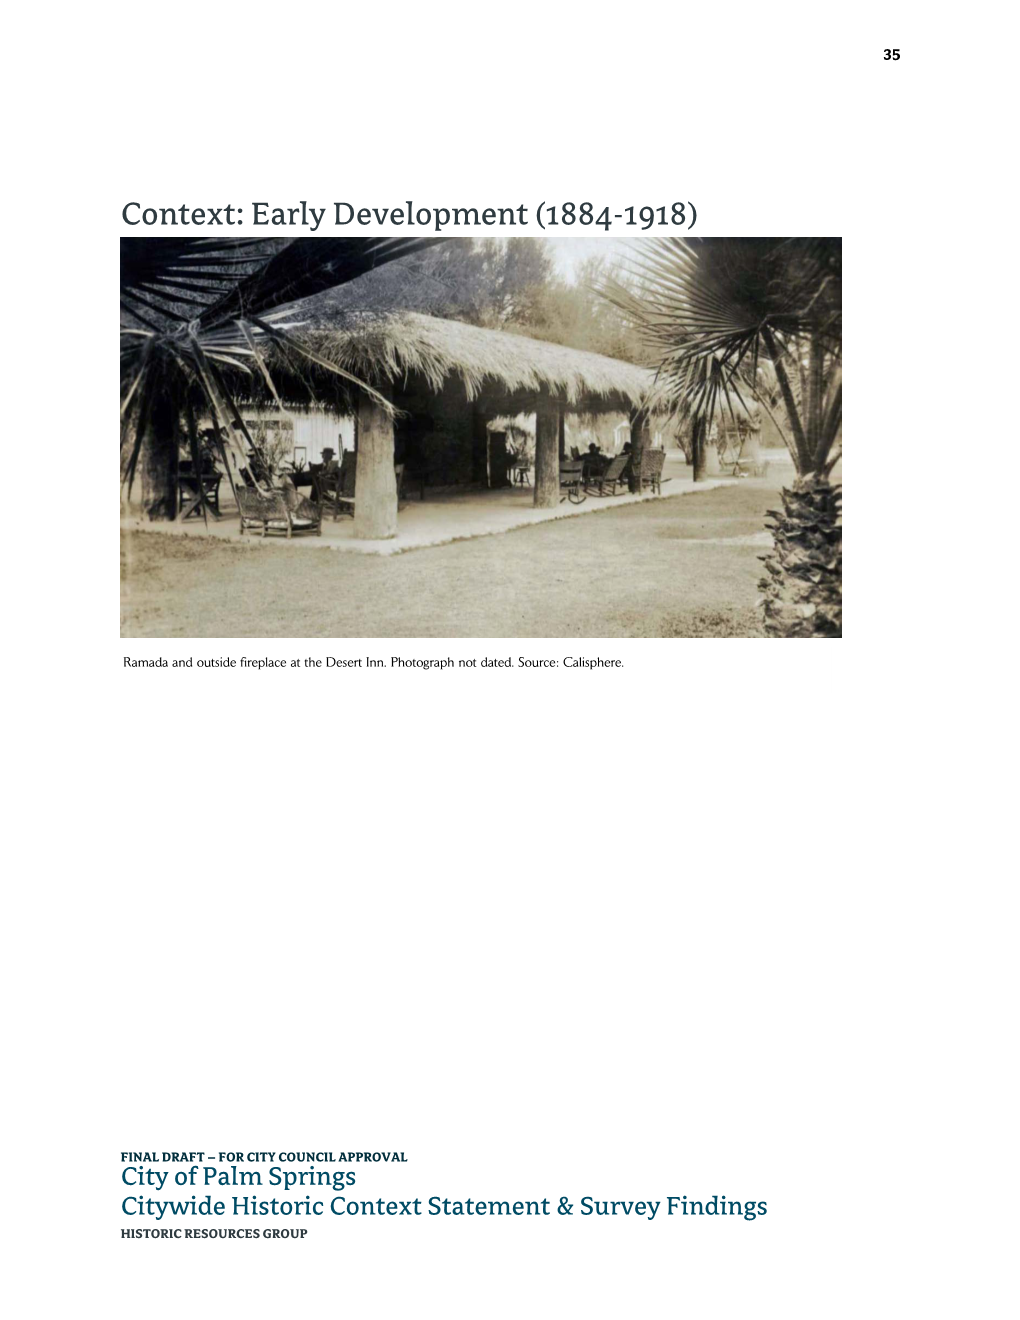 Context: Early Development (1884-1918)